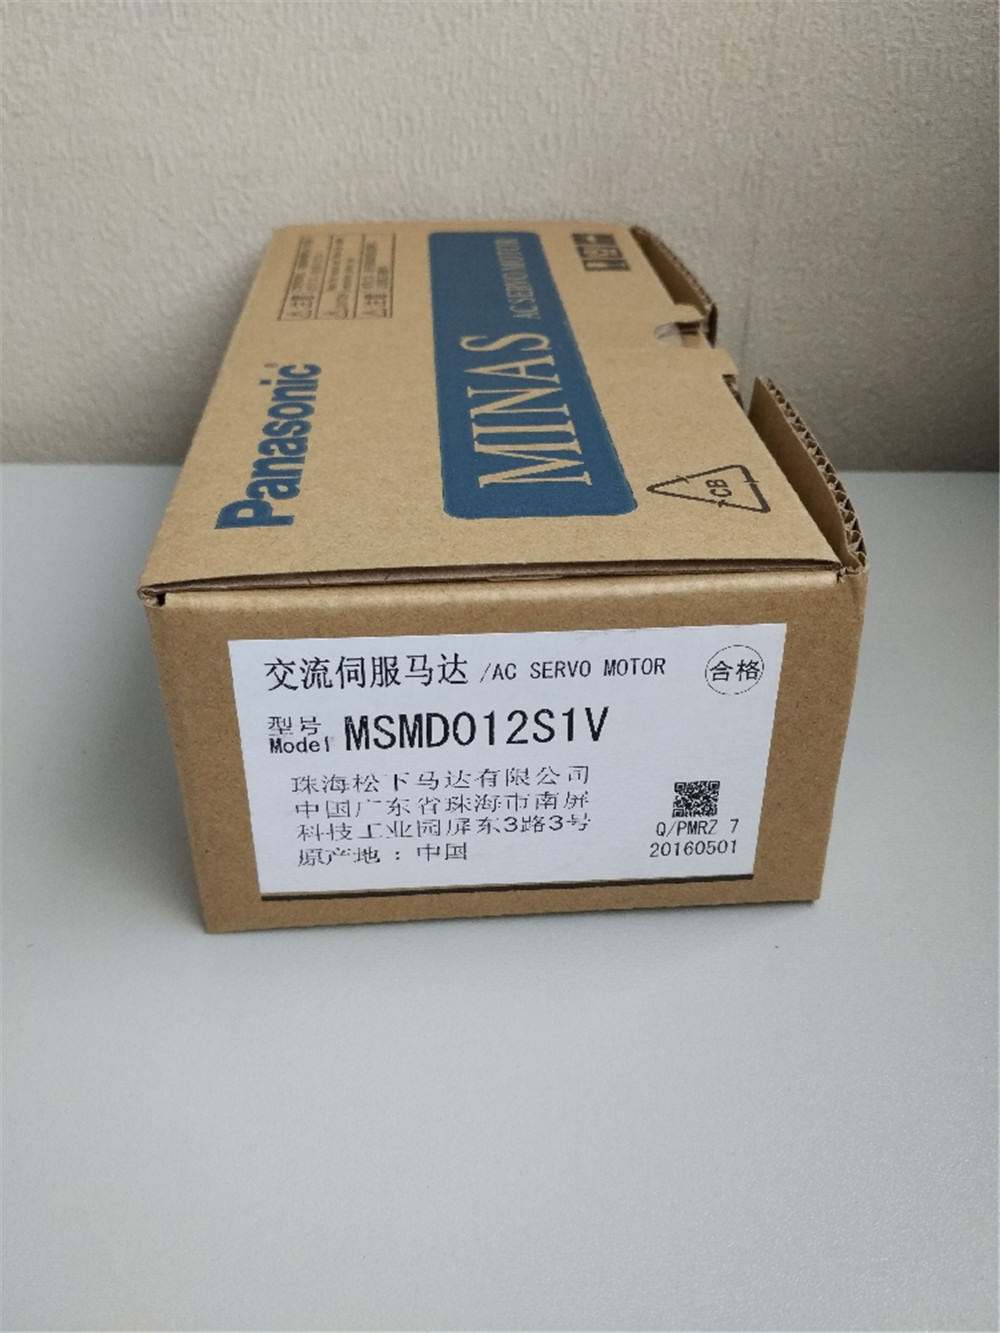 Brand New PANASONIC AC Servo motor MSMD012S1V in box - Click Image to Close